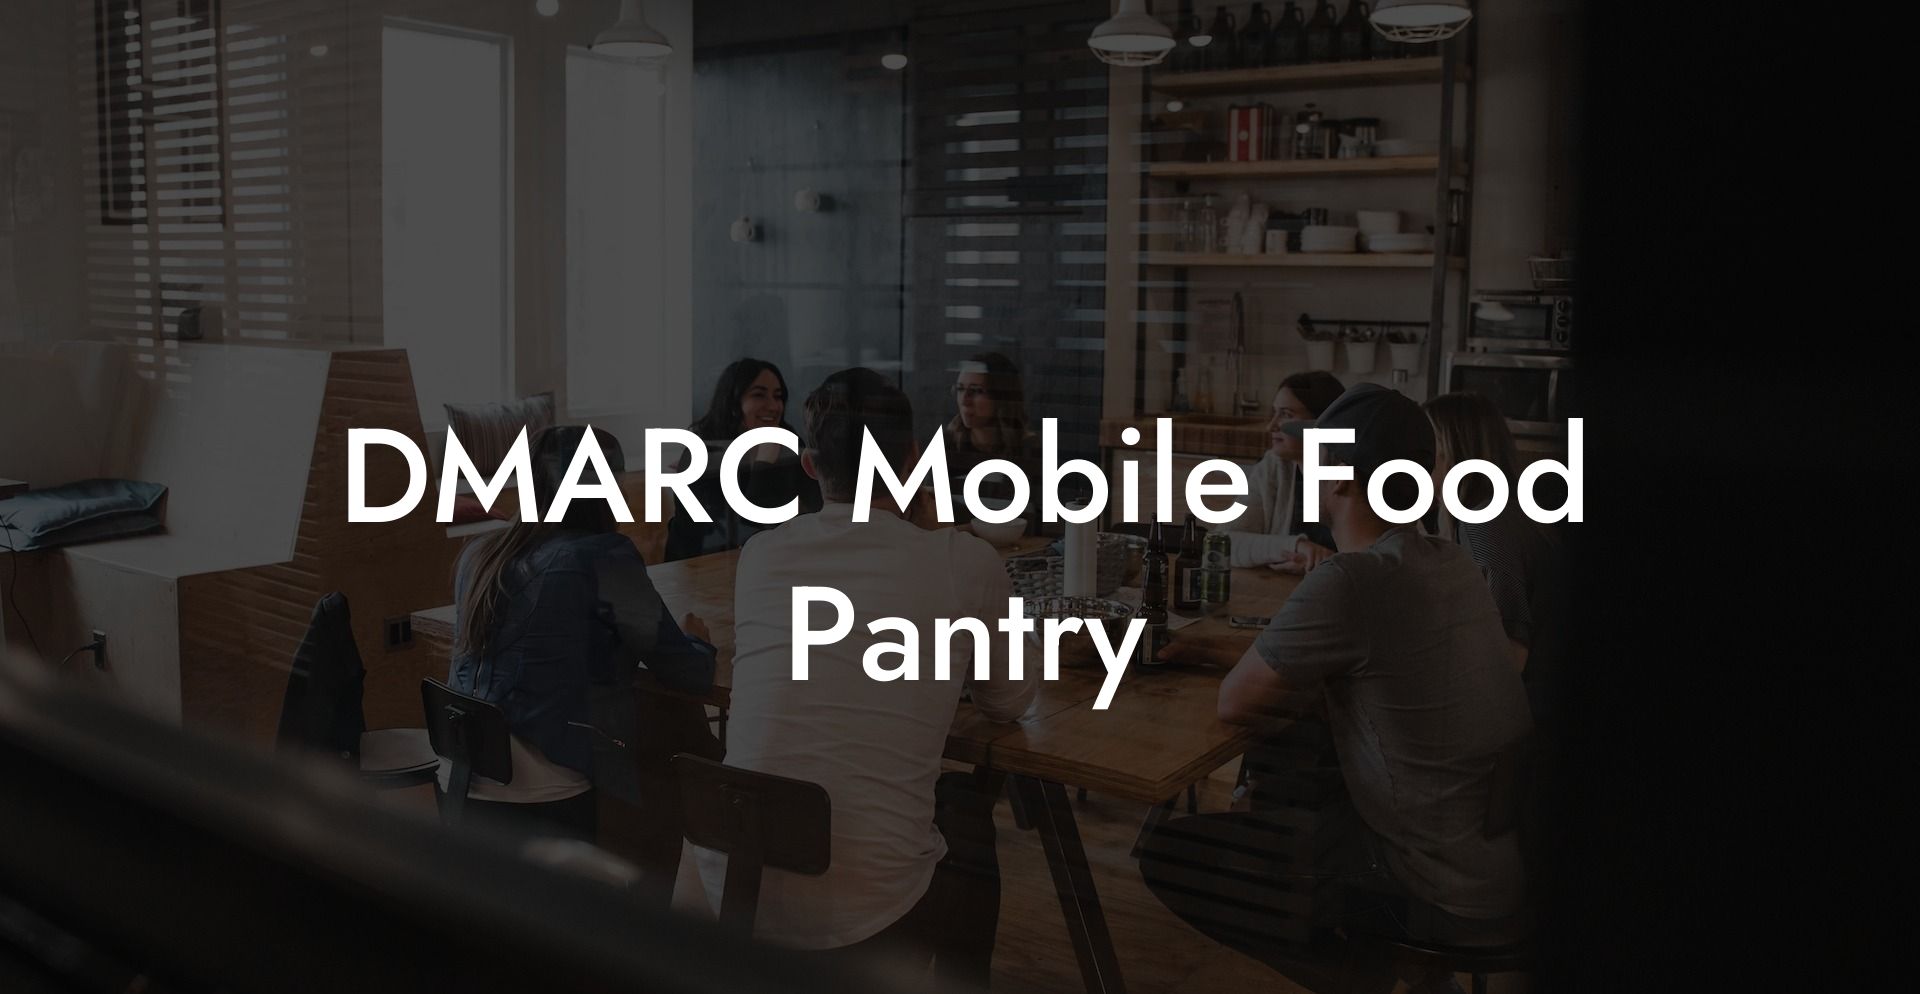 DMARC Mobile Food Pantry